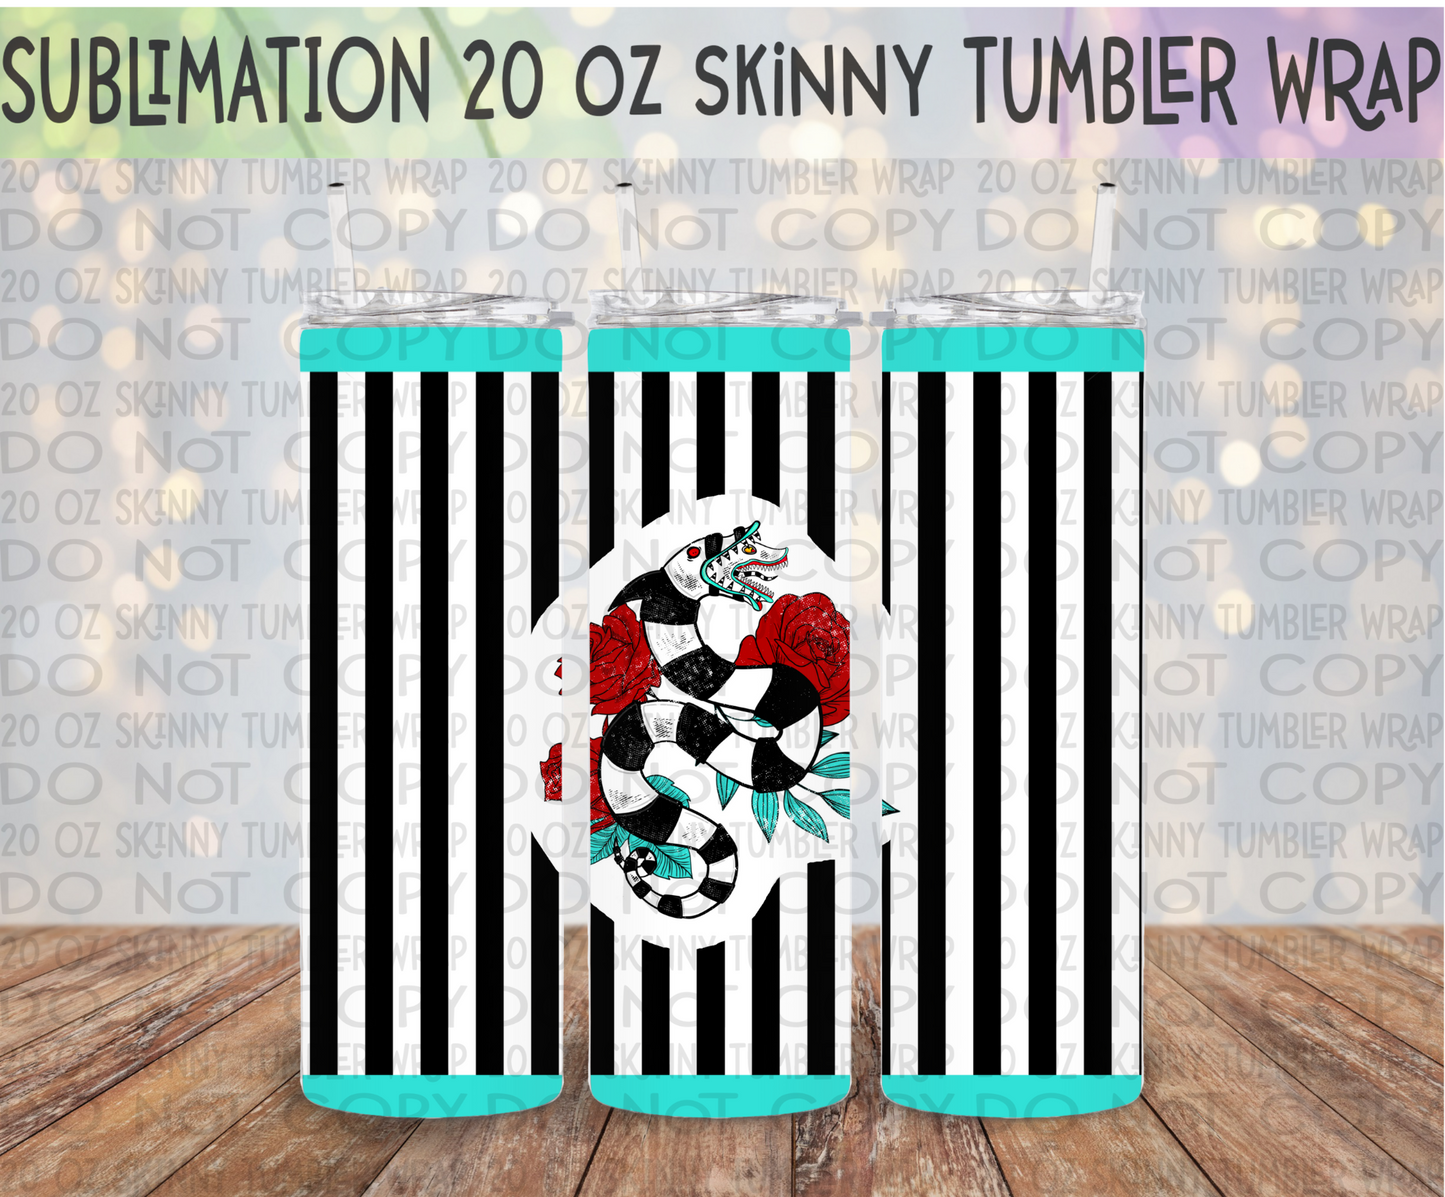 Sandworm 20 Oz Skinny Tumbler Wrap - Sublimation Transfer - RTS